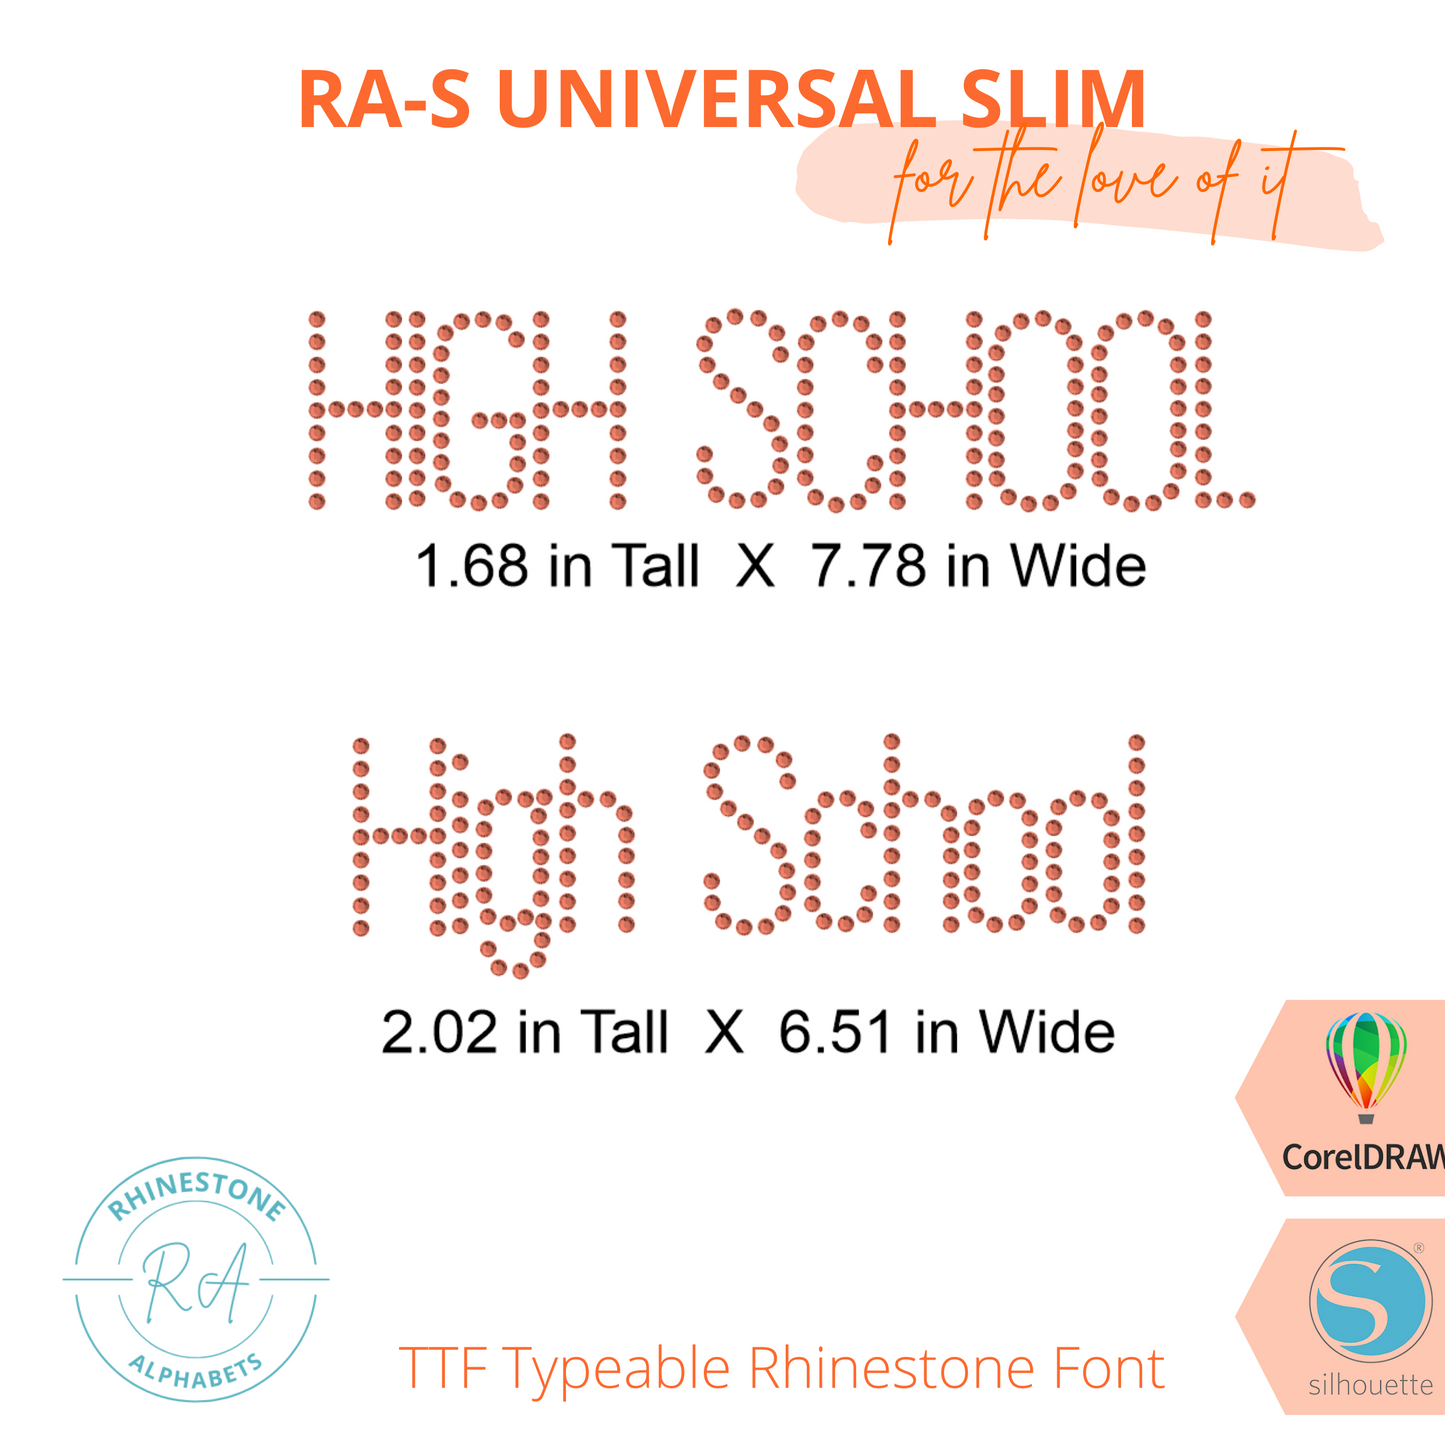 RA-S Universal Slim - RhinestoneAlphabets